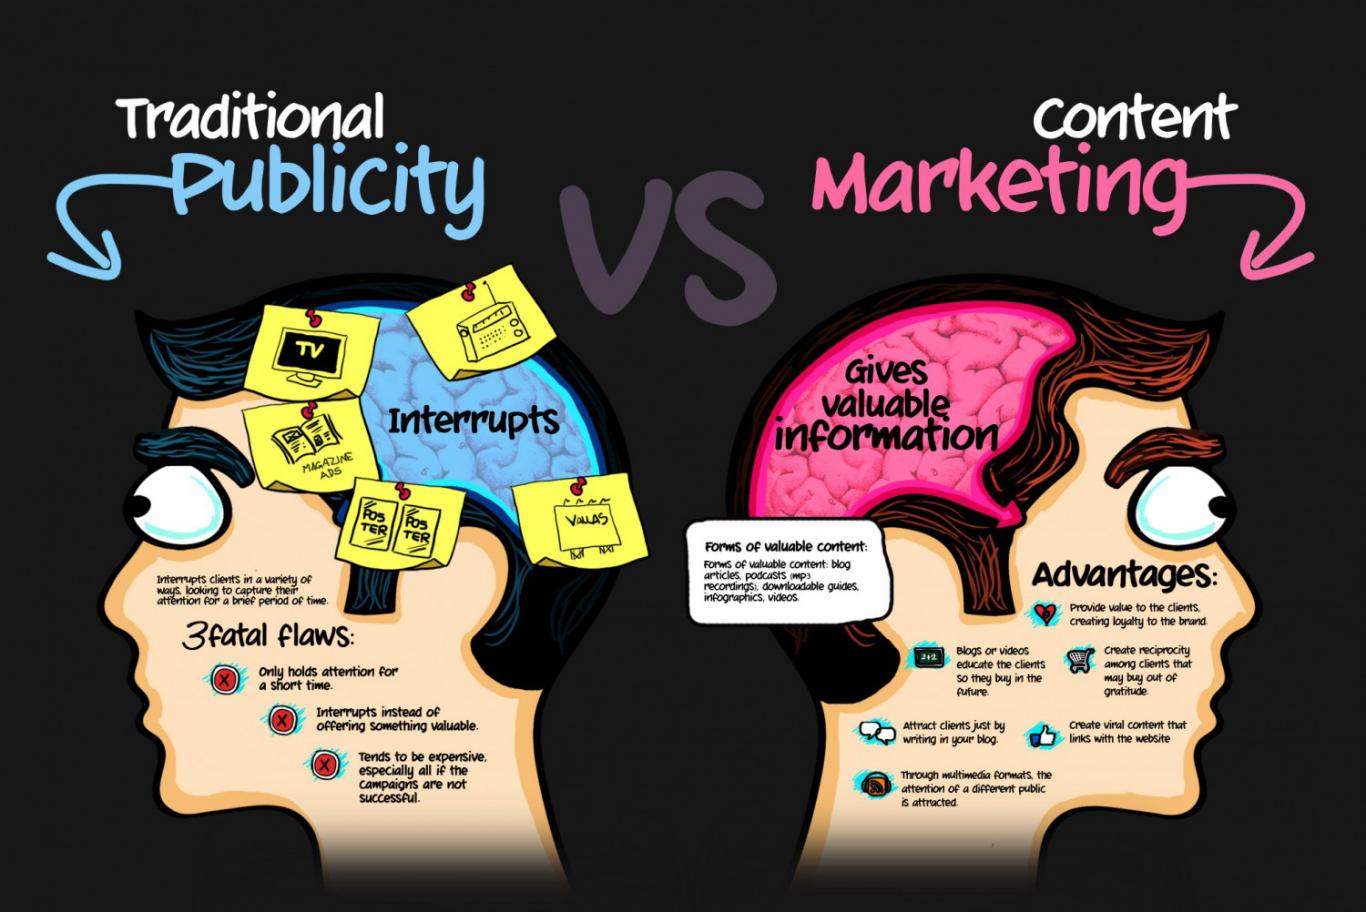 Tradition vs Content Marketing